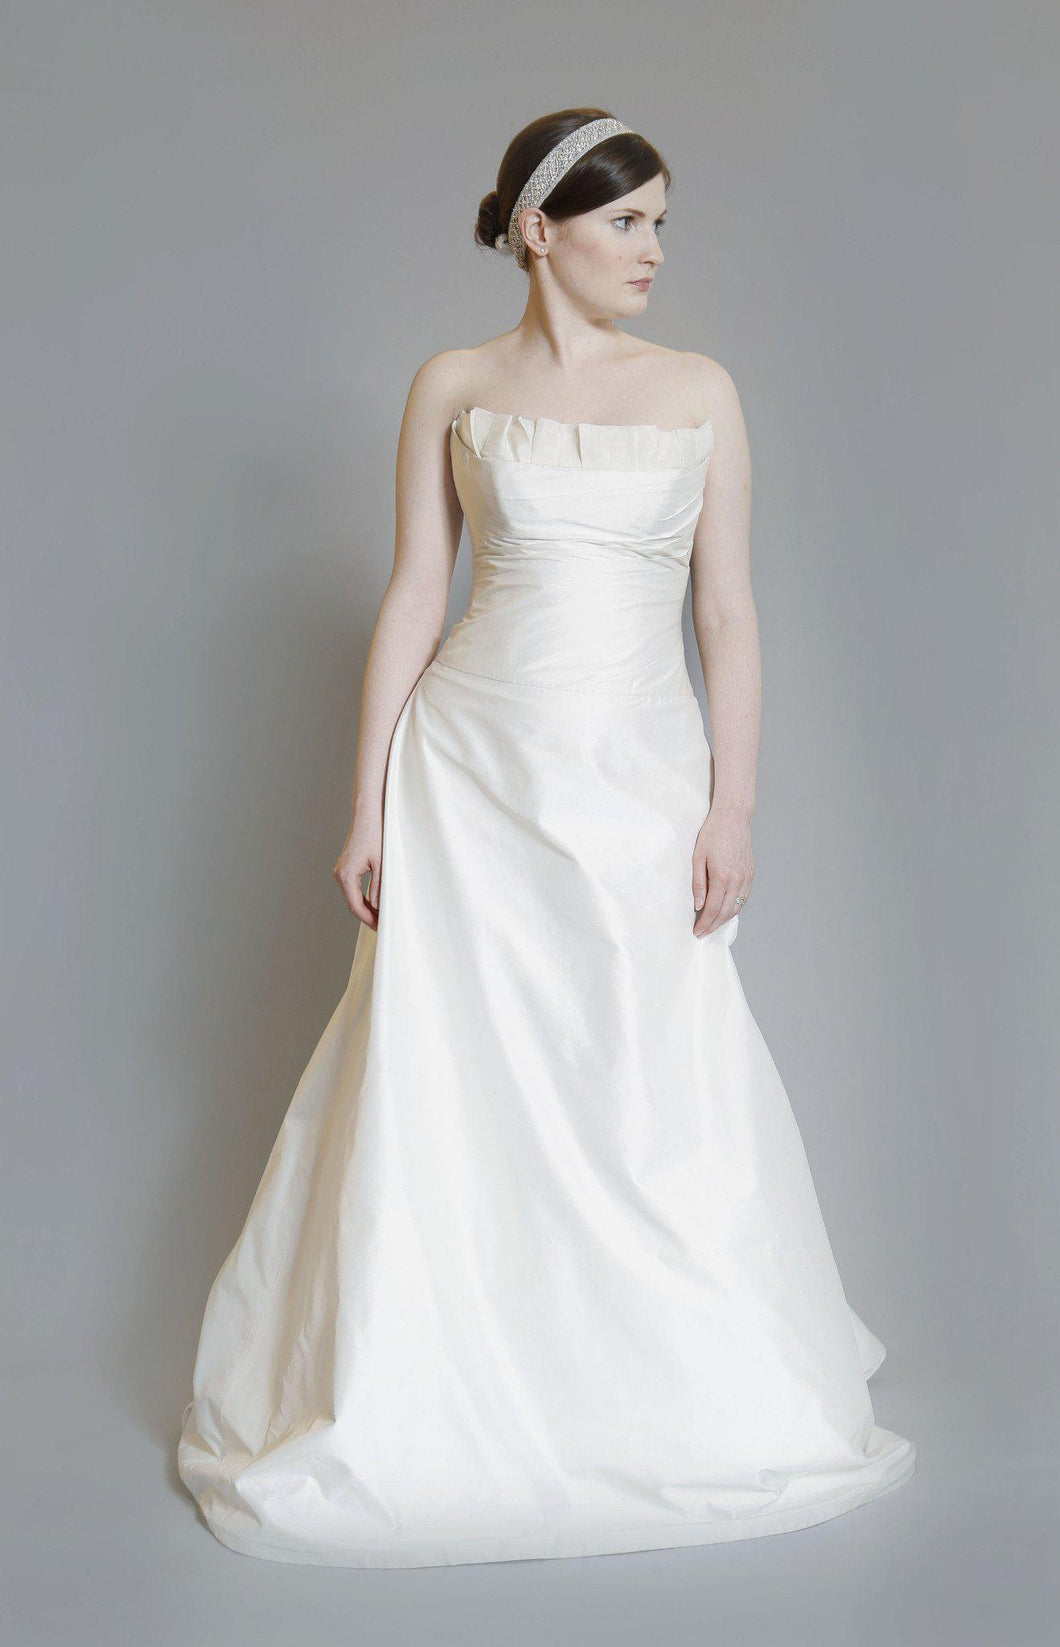 Legends by Romona Keveza Strapless Silk Dress for Kleinfeld - Romona Keveza - Nearly Newlywed Bridal Boutique - 1